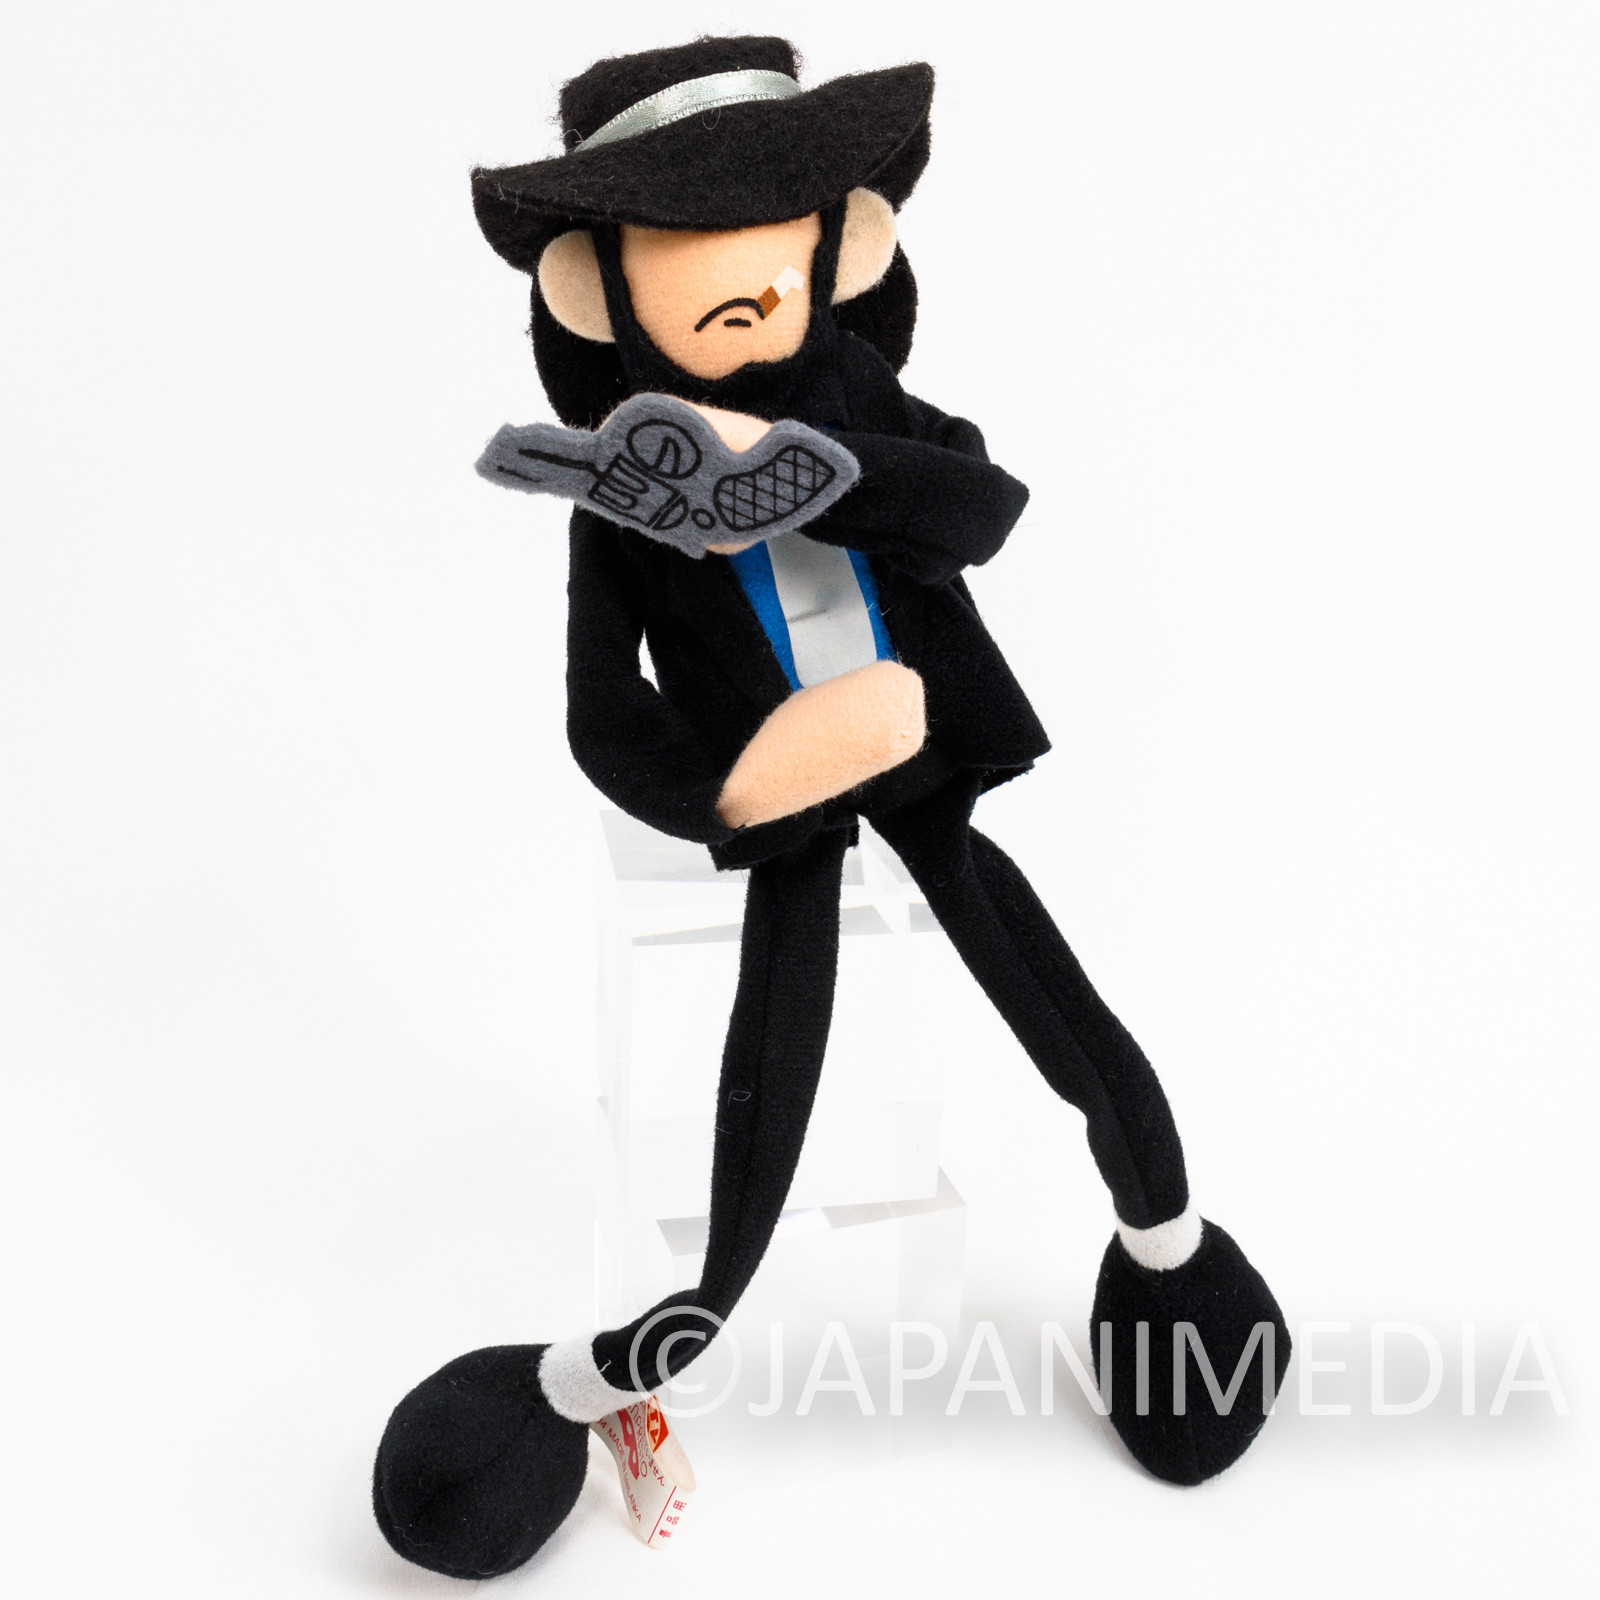 Lupin the Third JIGEN Bendable Plush Doll Figure 10" JAPAN ANIME